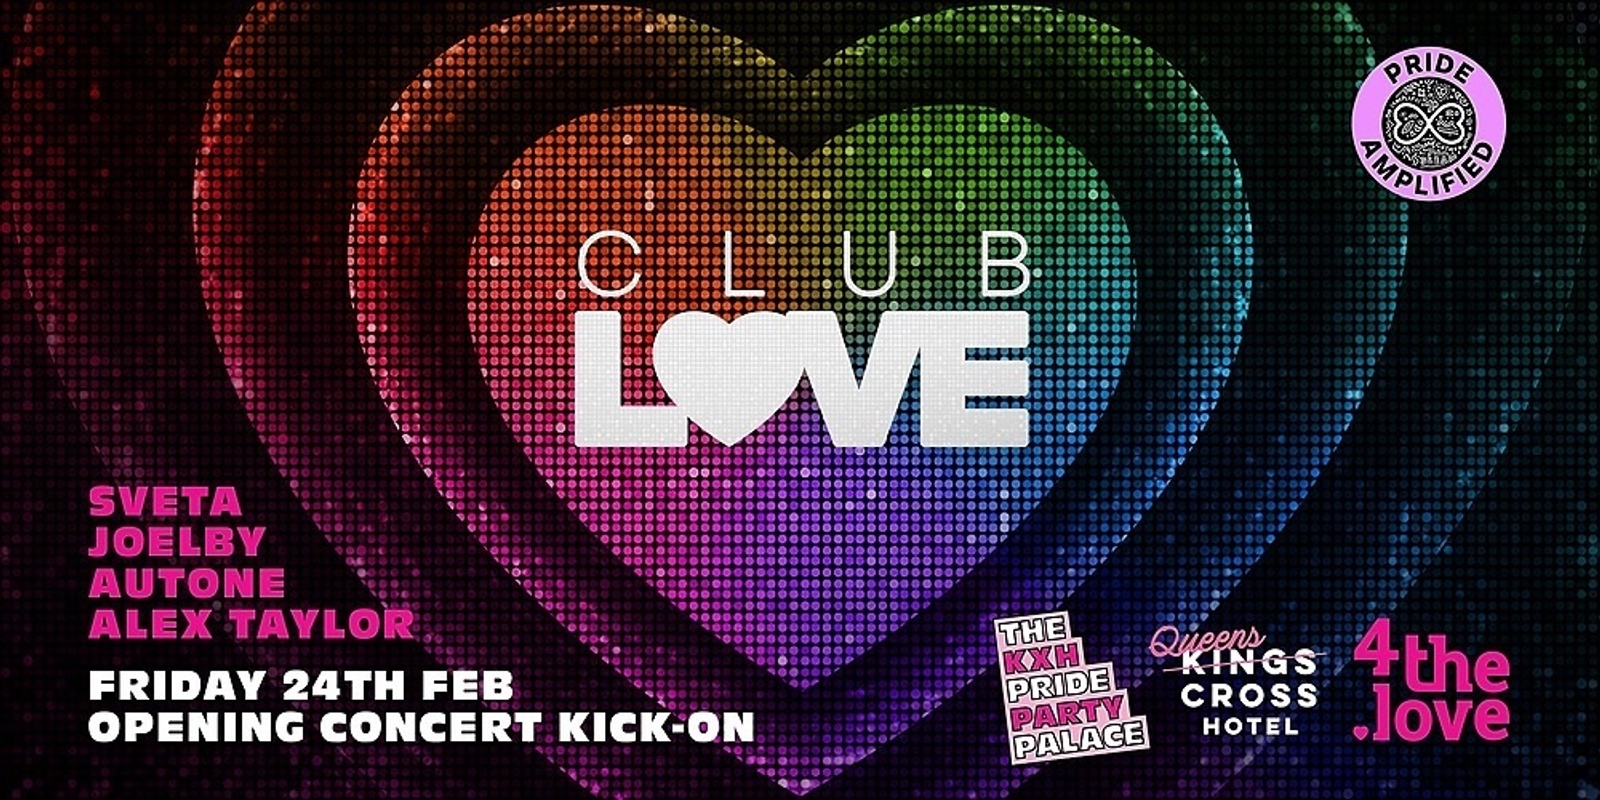 Banner image for club LOVE - Fri 24 Feb (Opening Concert Kick-on)